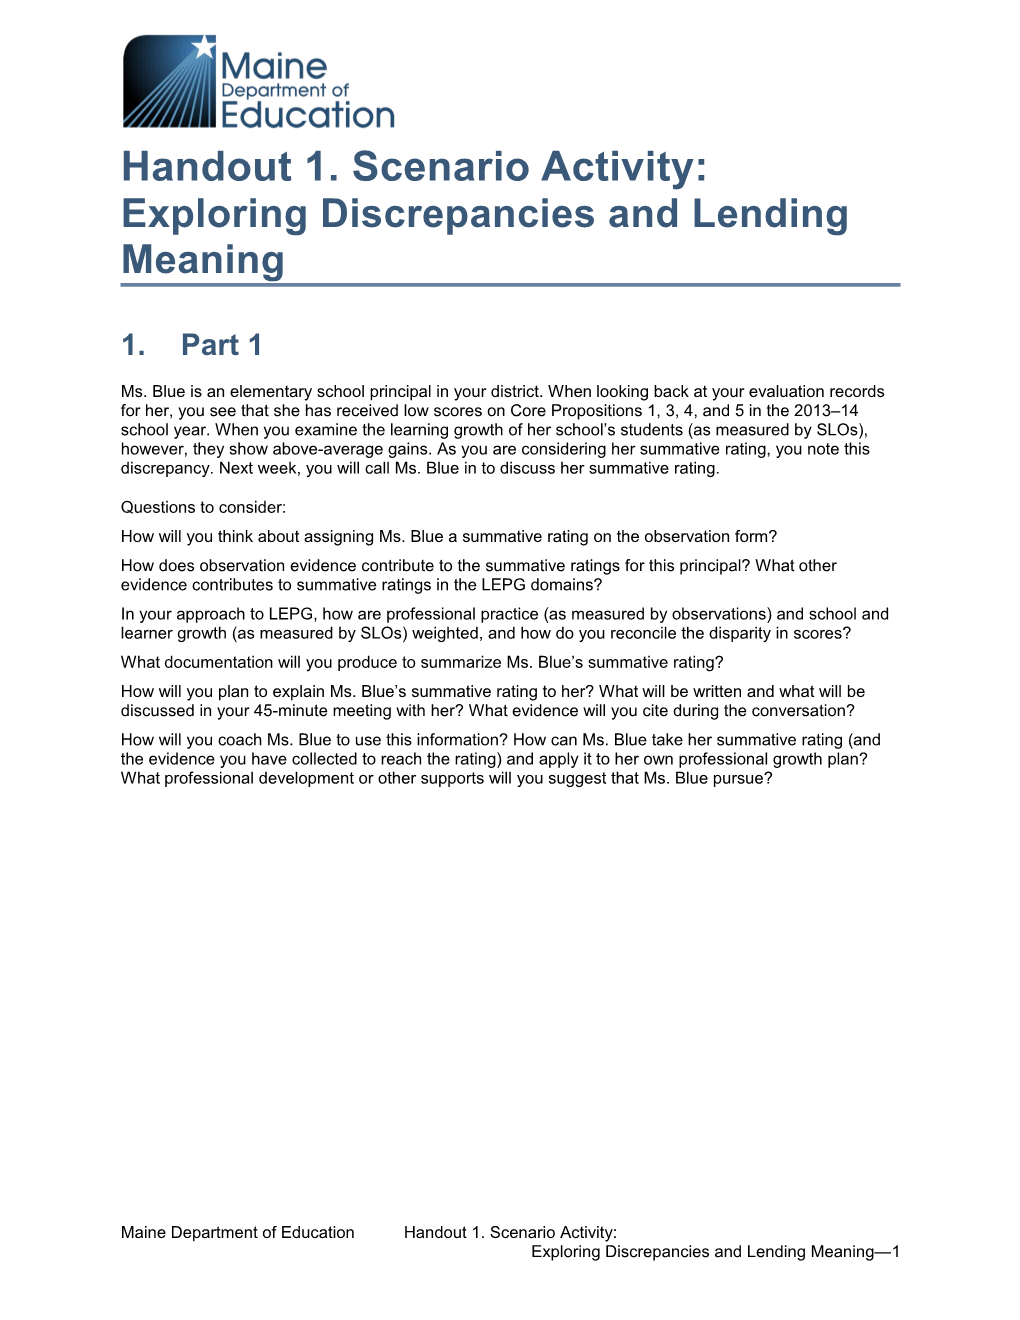 Handout 1. Scenario Activity: Exploring Discrepancies and Lending Meaning